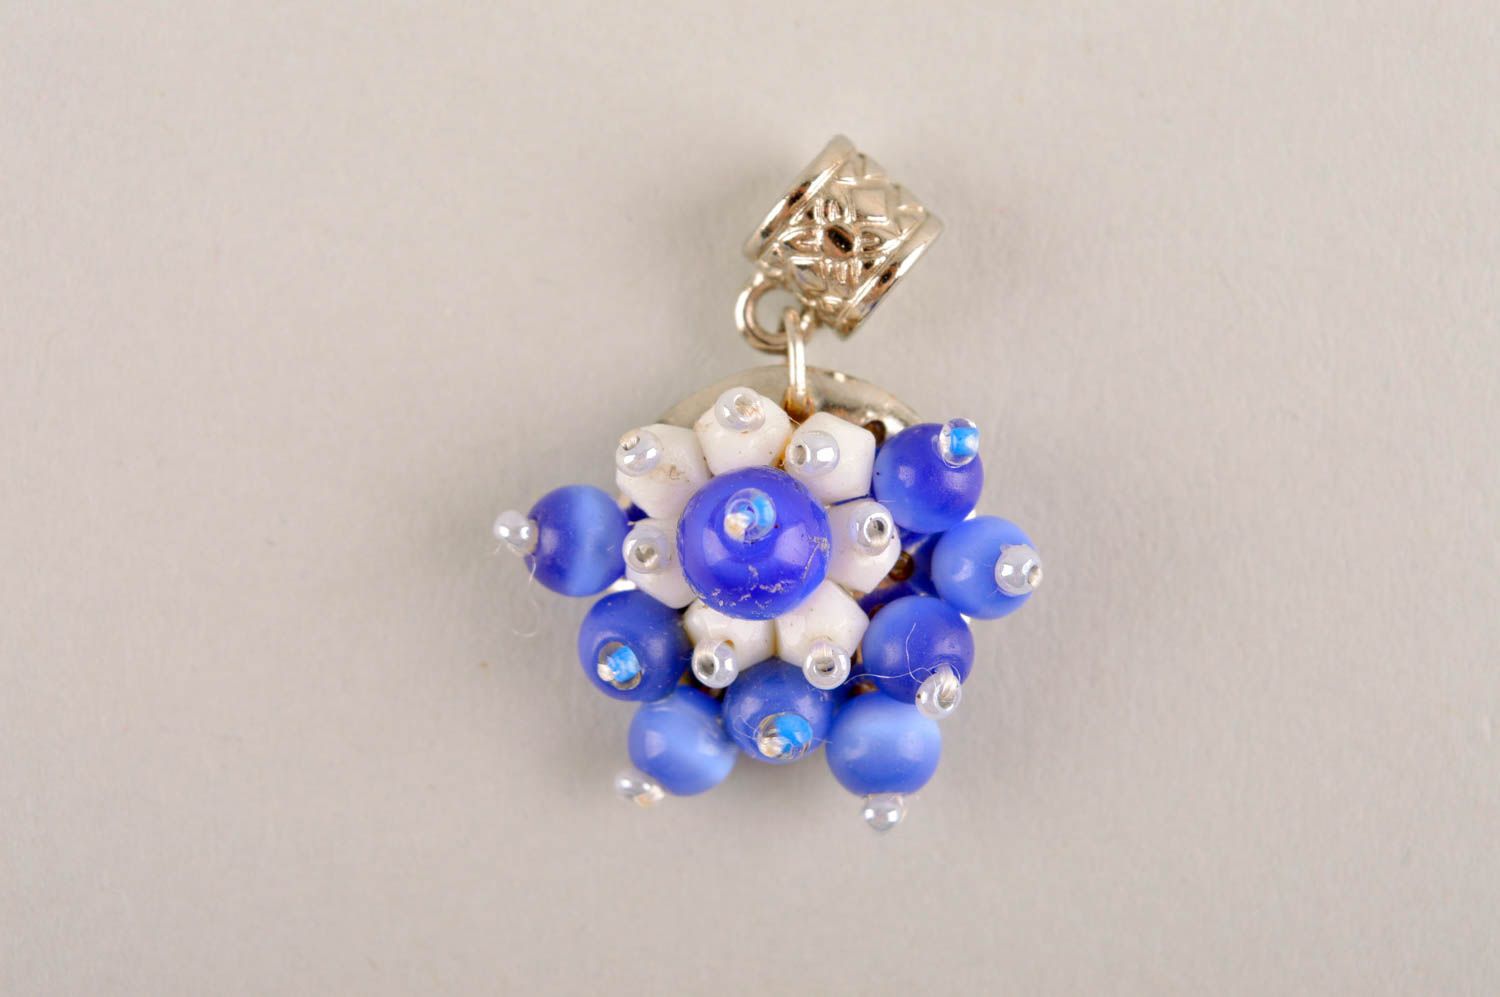 Handmade jewelry beaded jewelry pendant necklace designer accessories gift ideas photo 2